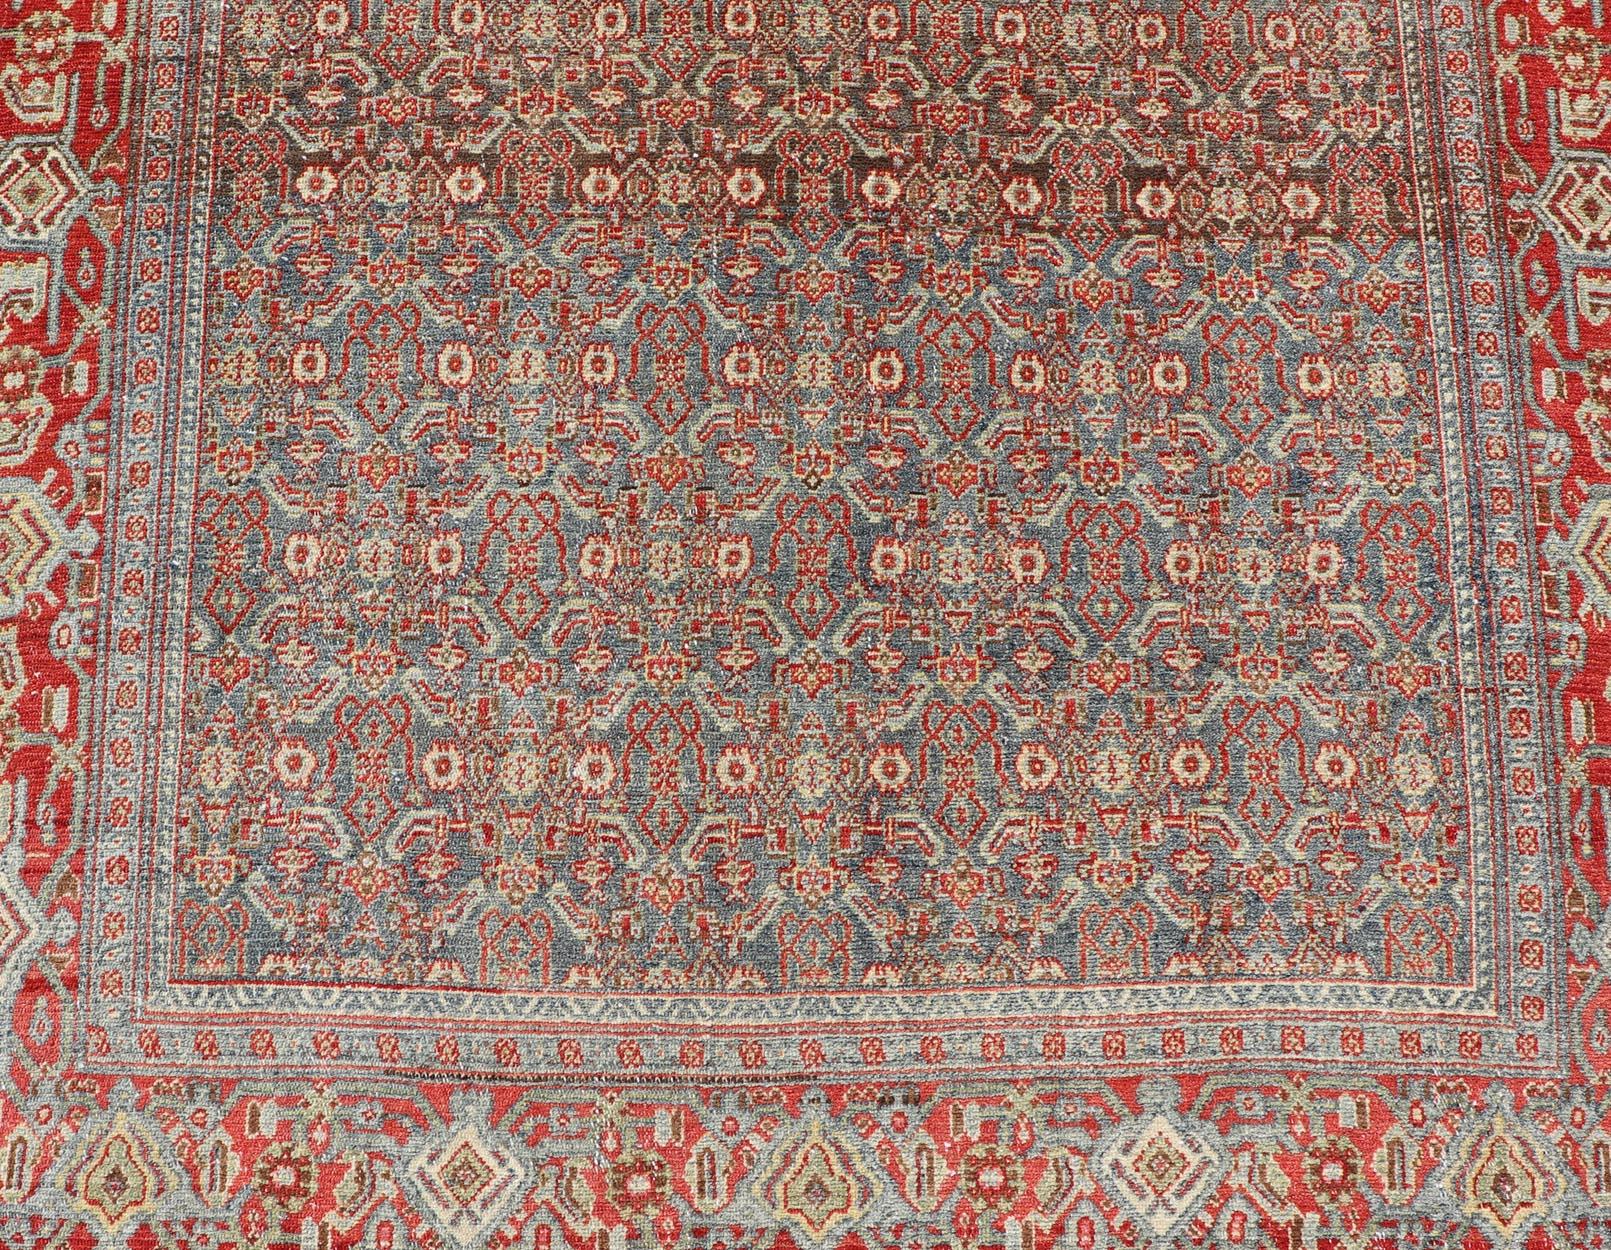 Measures: 4'2 x 6'2 
Fine Antique Persian Senneh Rug with Herati Geometric Design in Background. Keivan Woven Arts / rug EMB-22175-15035, country of origin / type: Iran / Senneh, circa 1910.

This incredibly fine antique Persian Senneh rug was